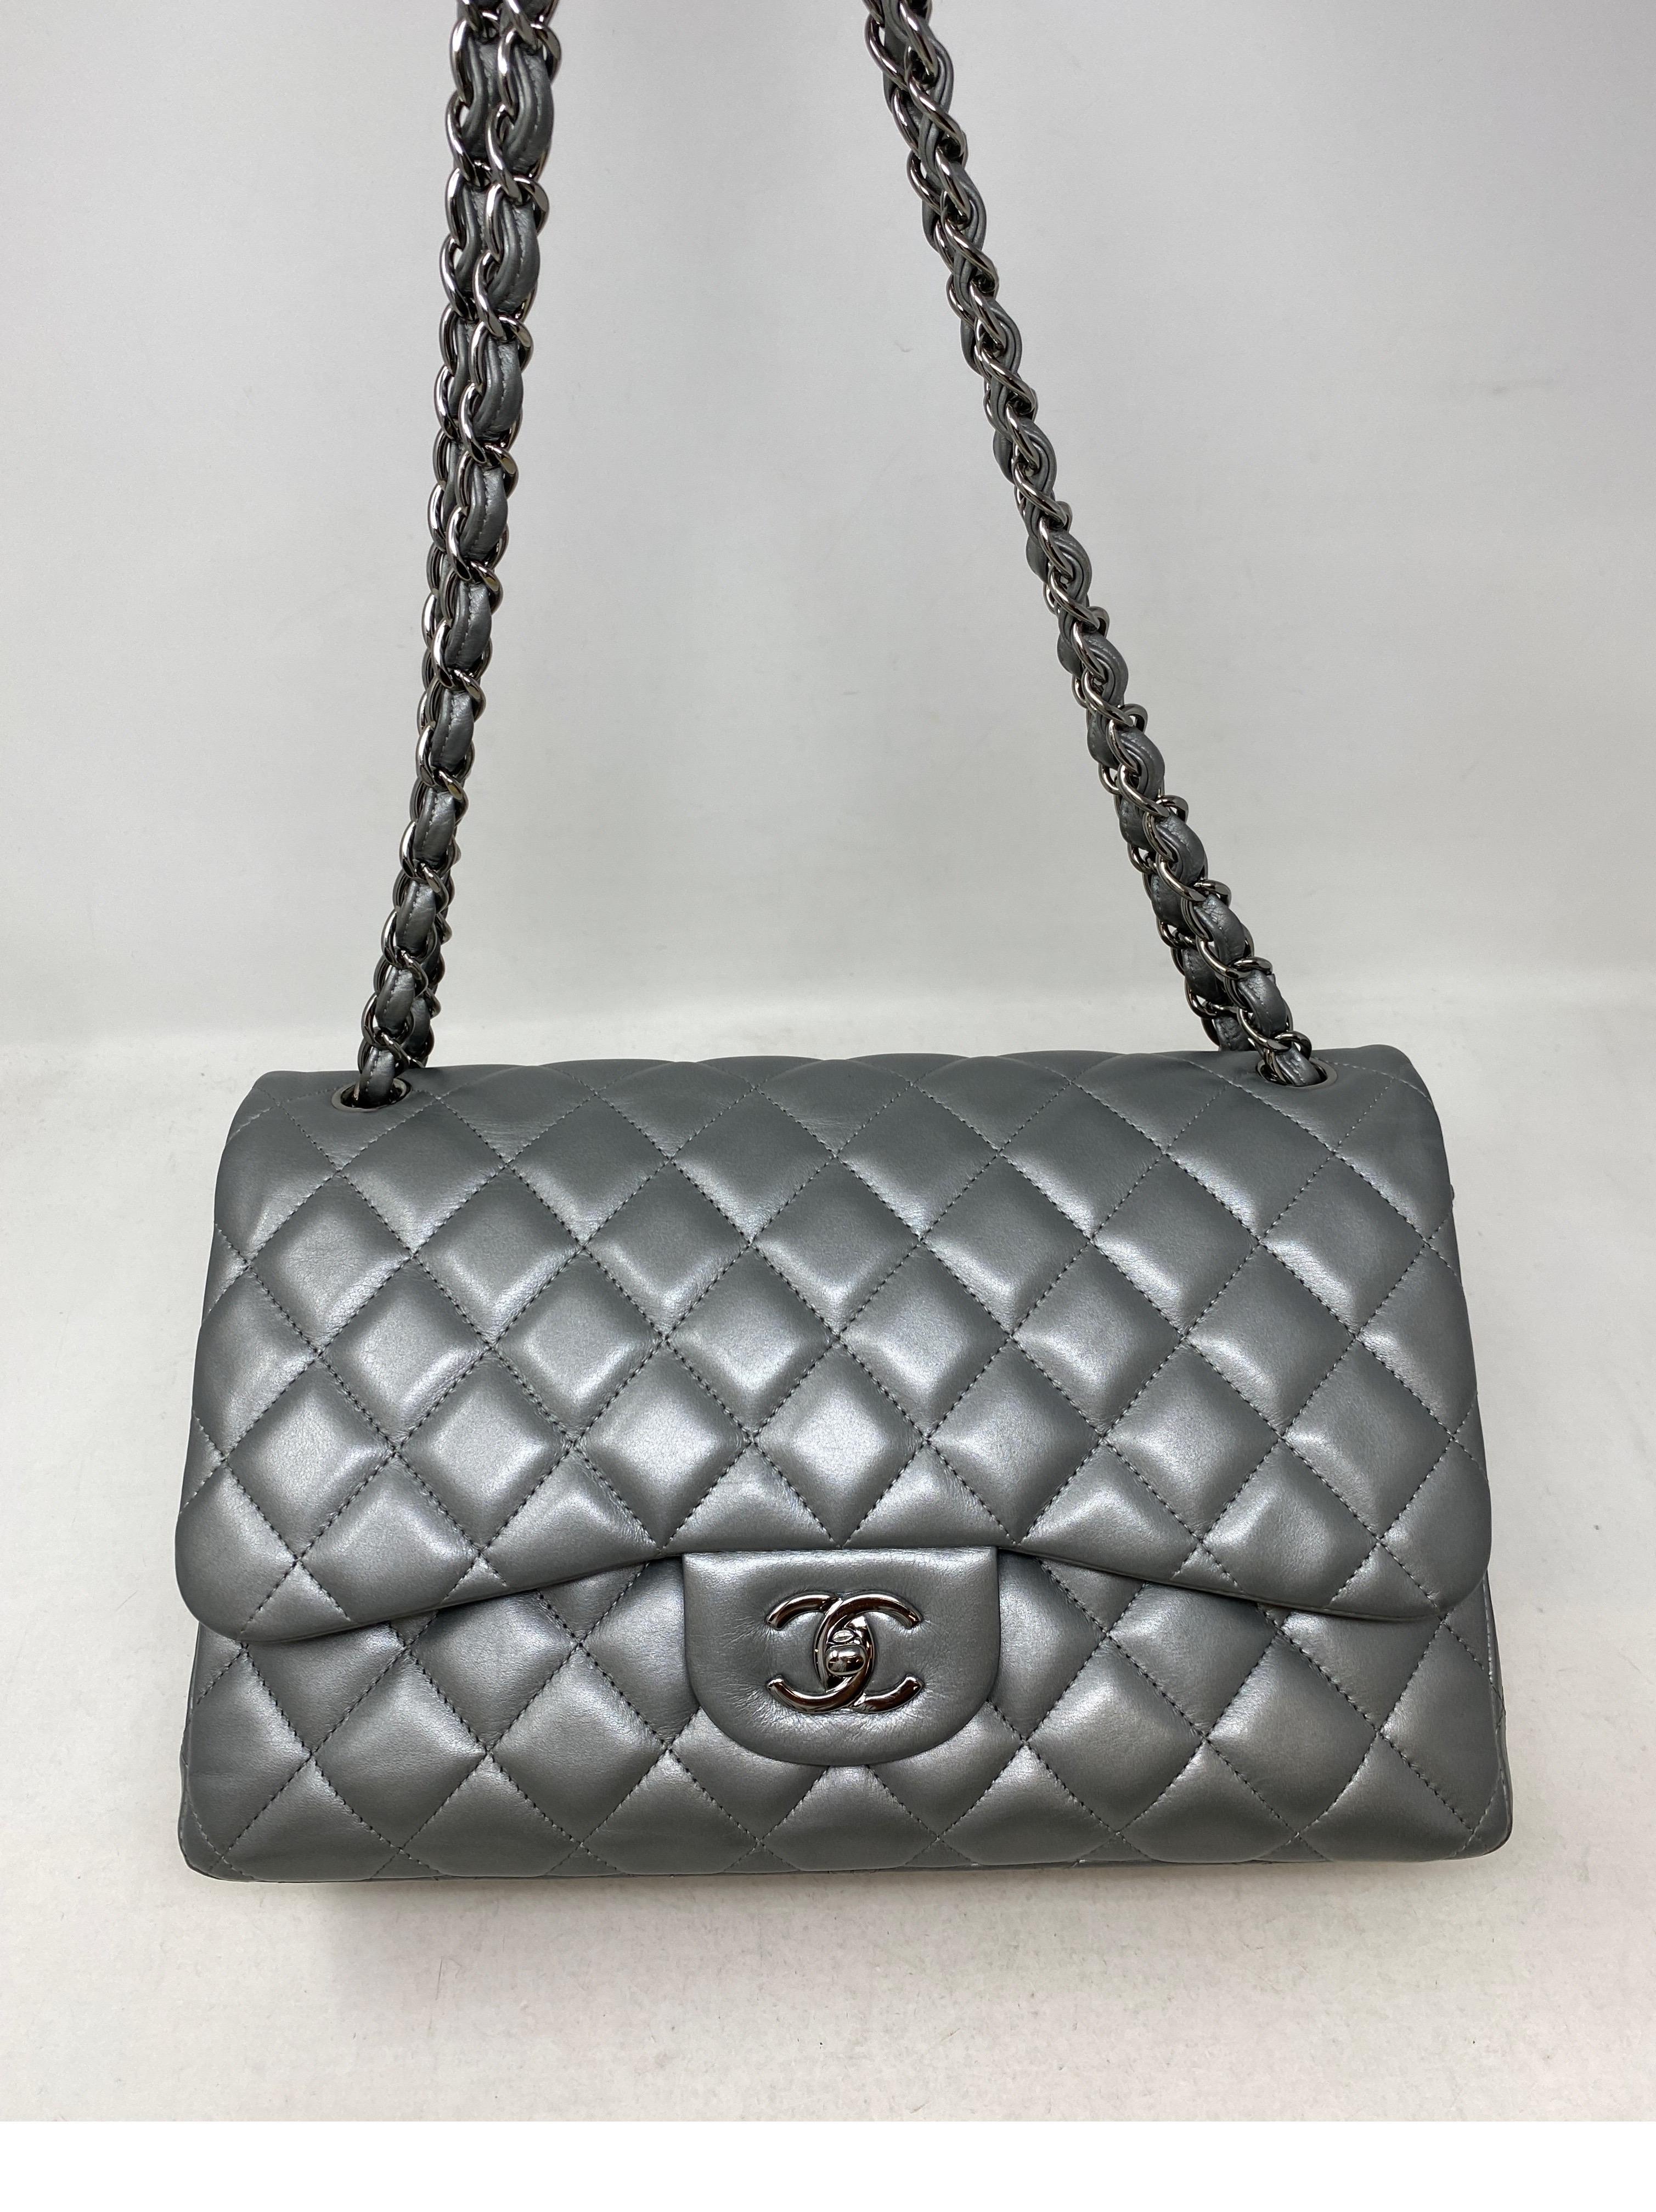 Chanel Silver Metallic Jumbo Bag  For Sale 5